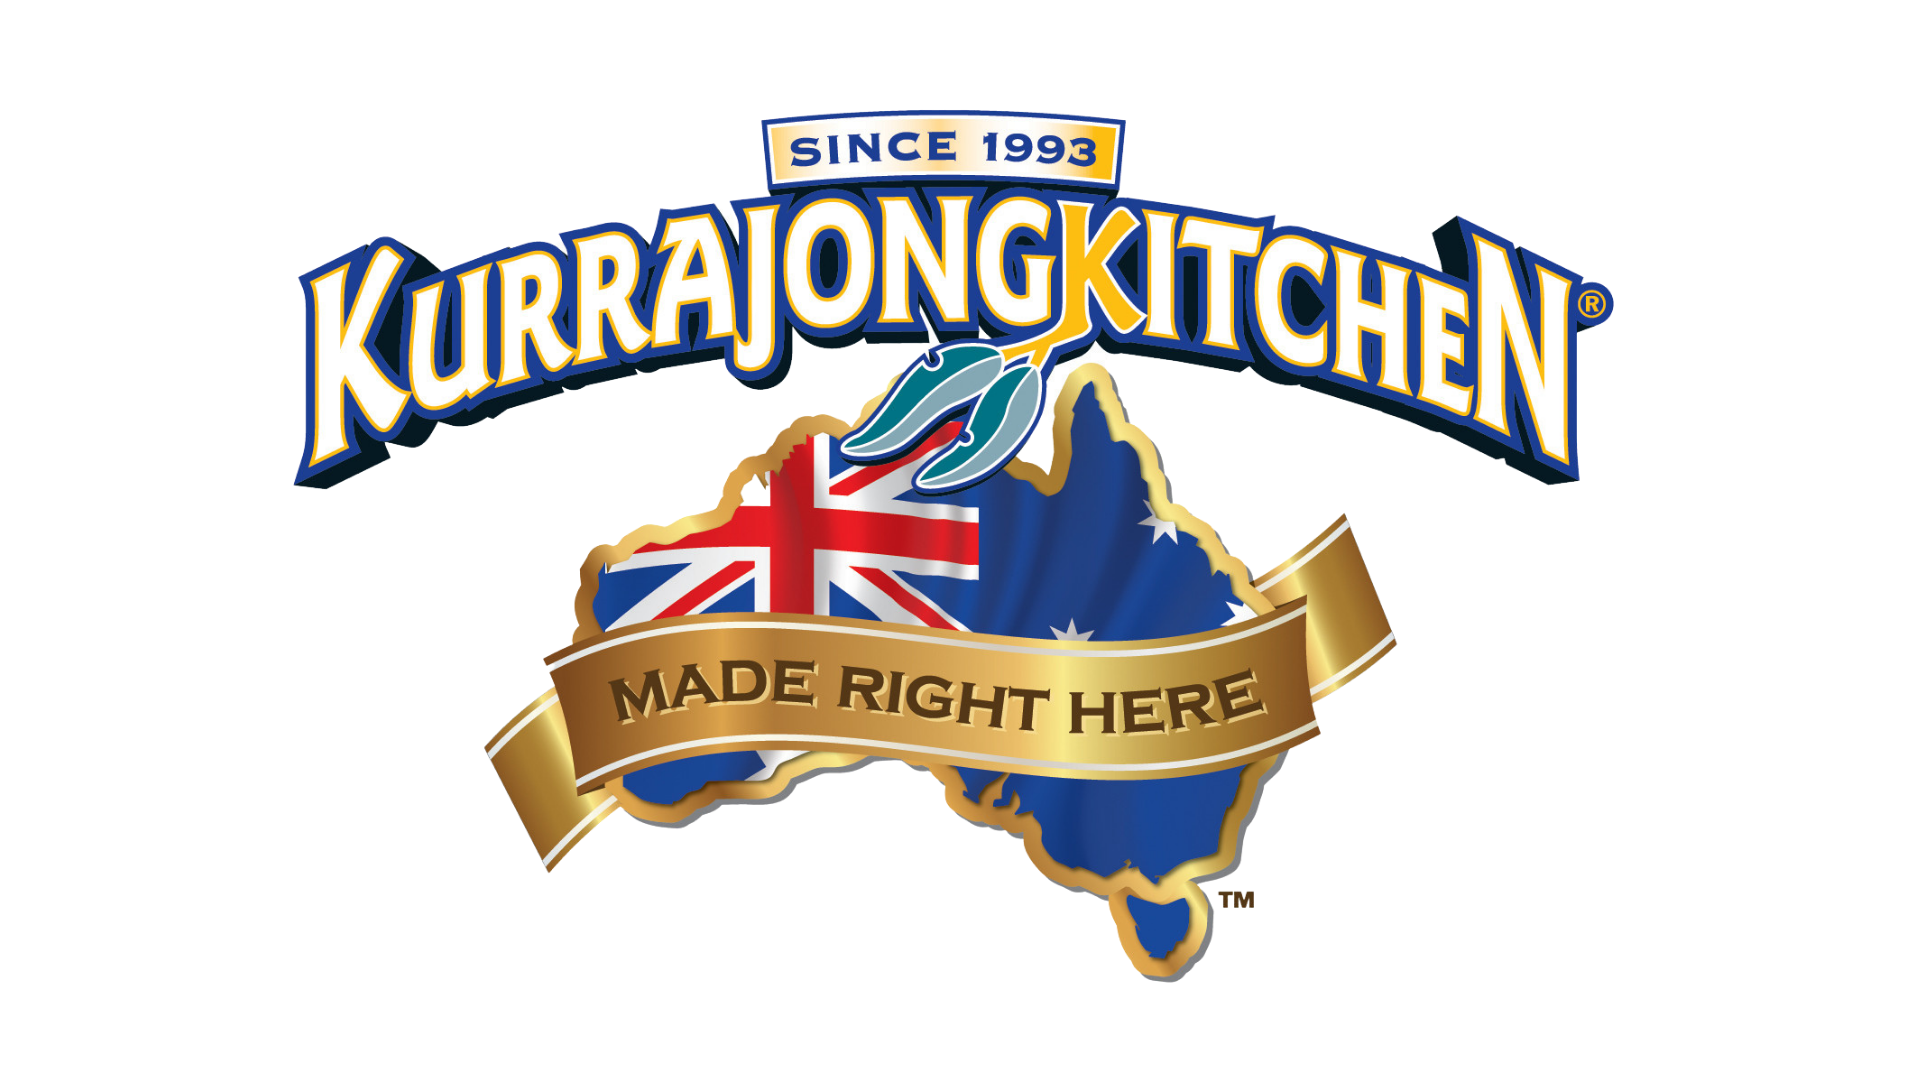 Kurrajong Kitchen